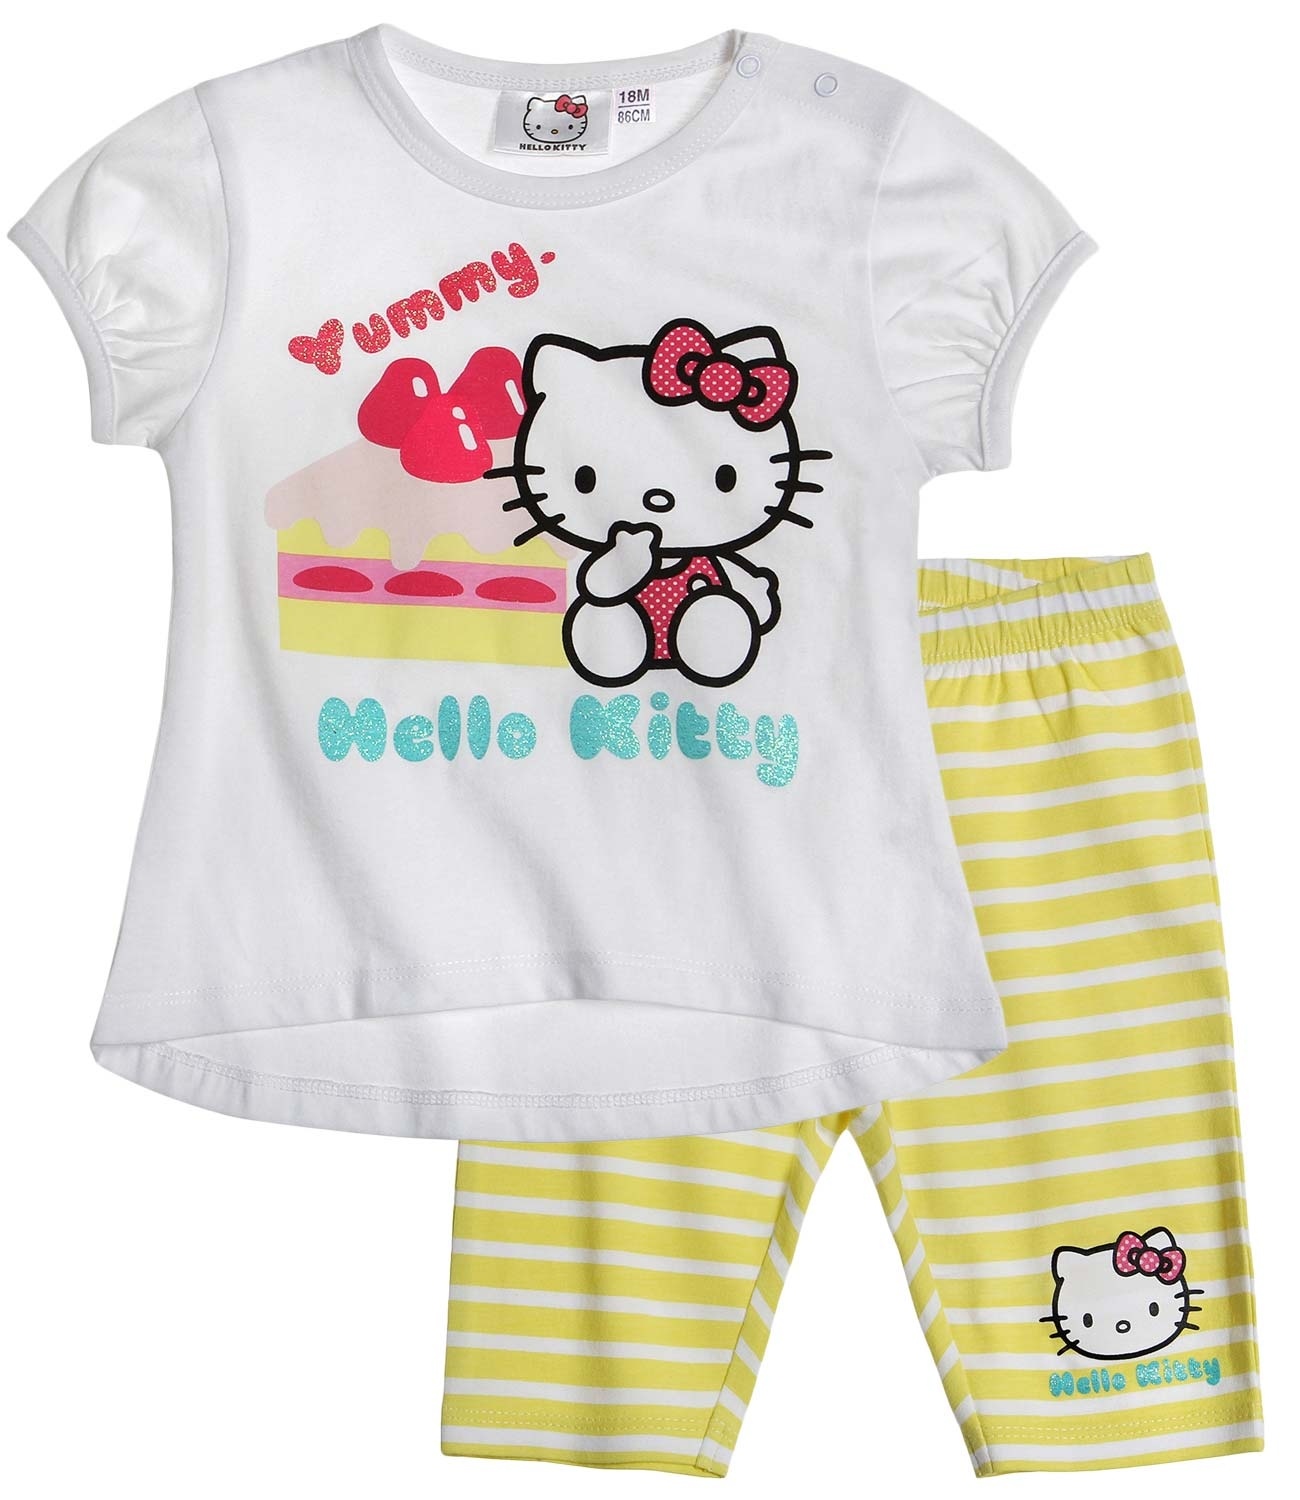 Hello Kitty® Compleu leggins Alb mix